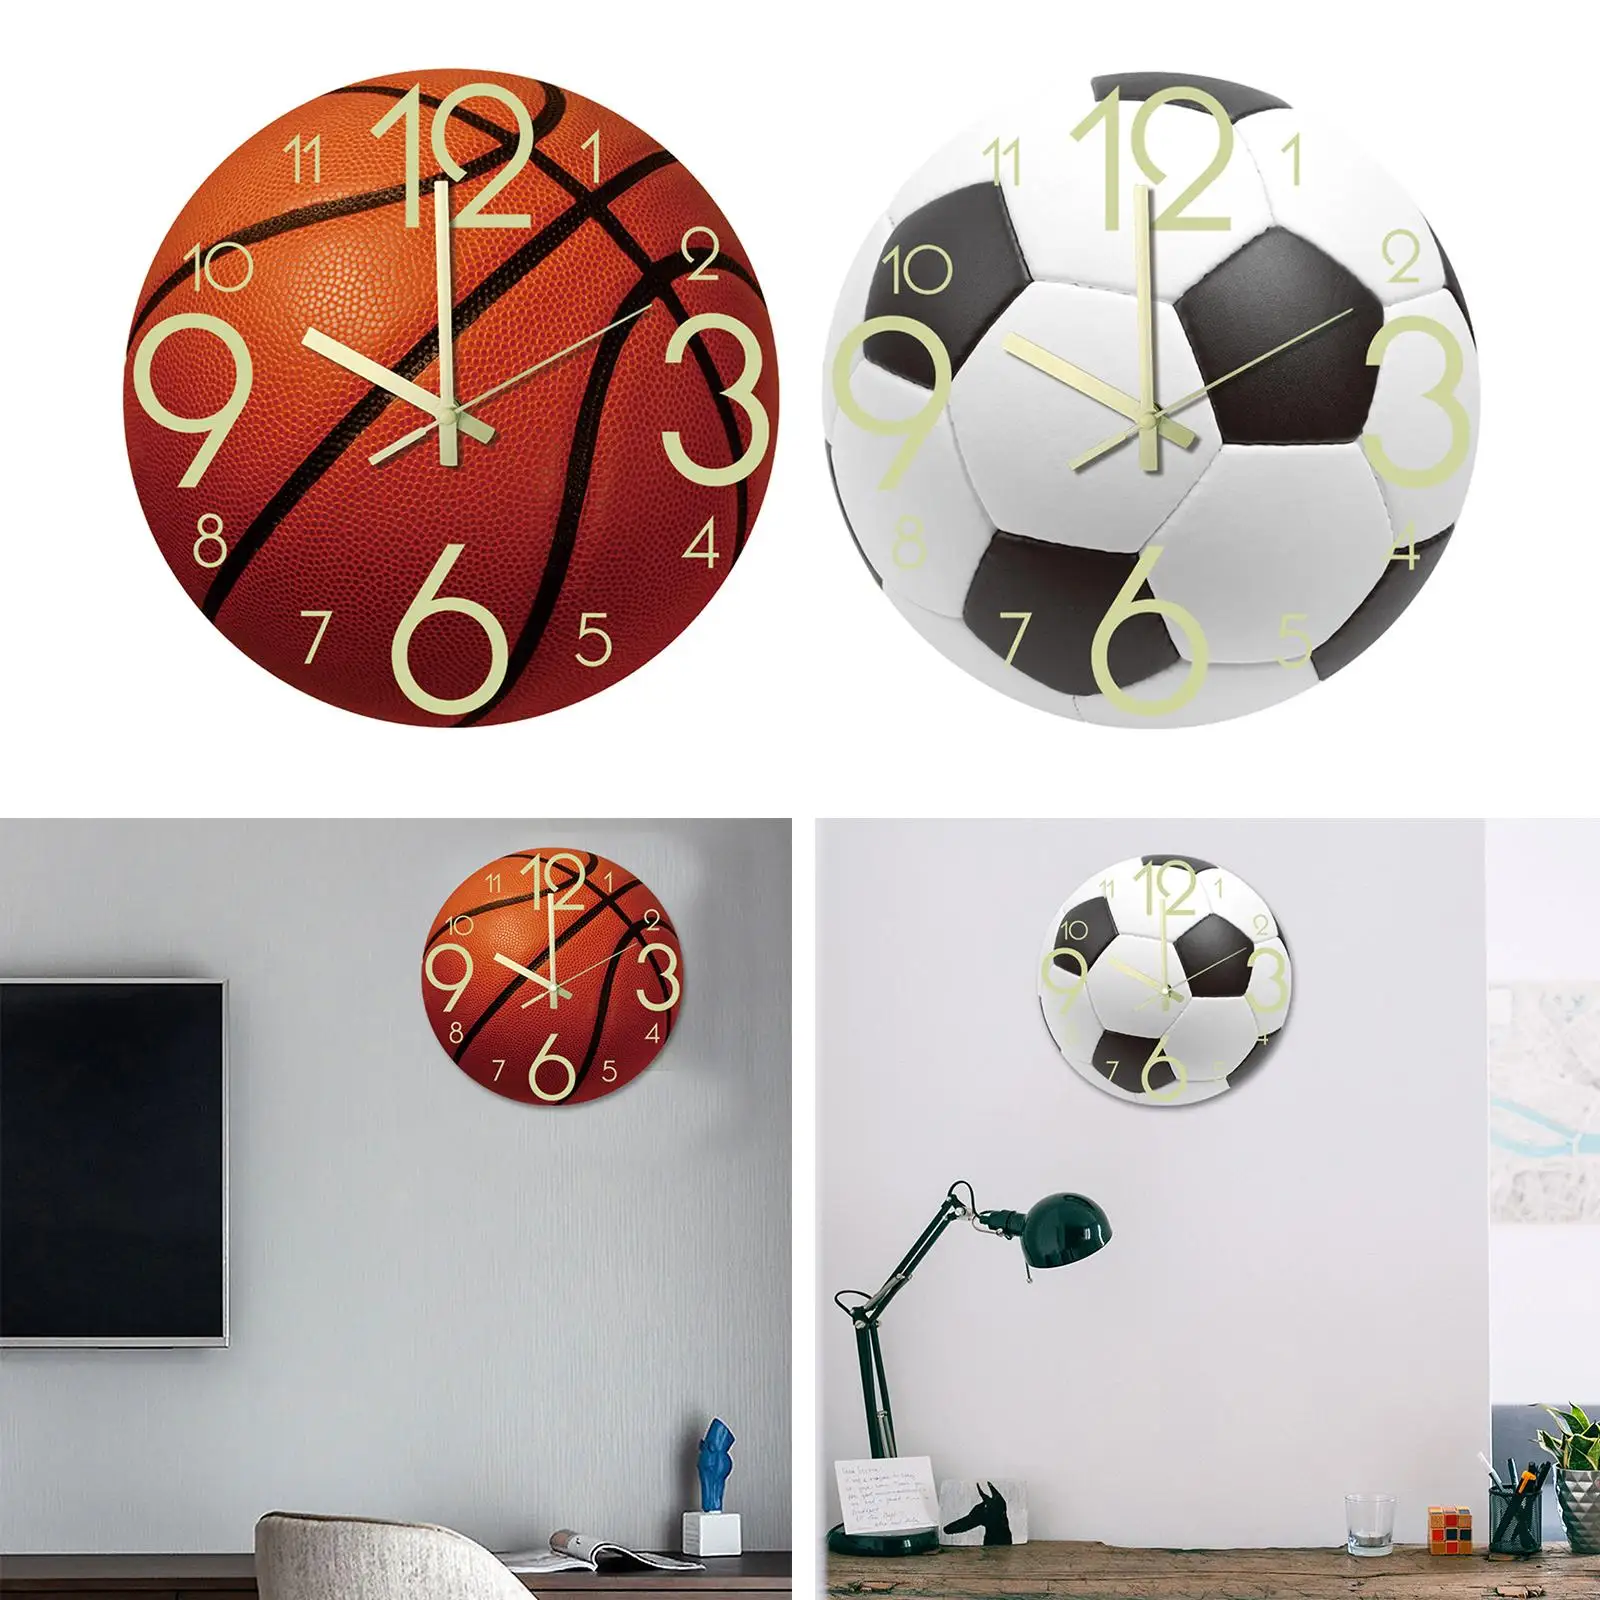 Acrylic 30cm Wall Clock Hanging Modern Hanging Watch Livingroom Bedroom Home Decor Study Room Restaurant Clocks Decor